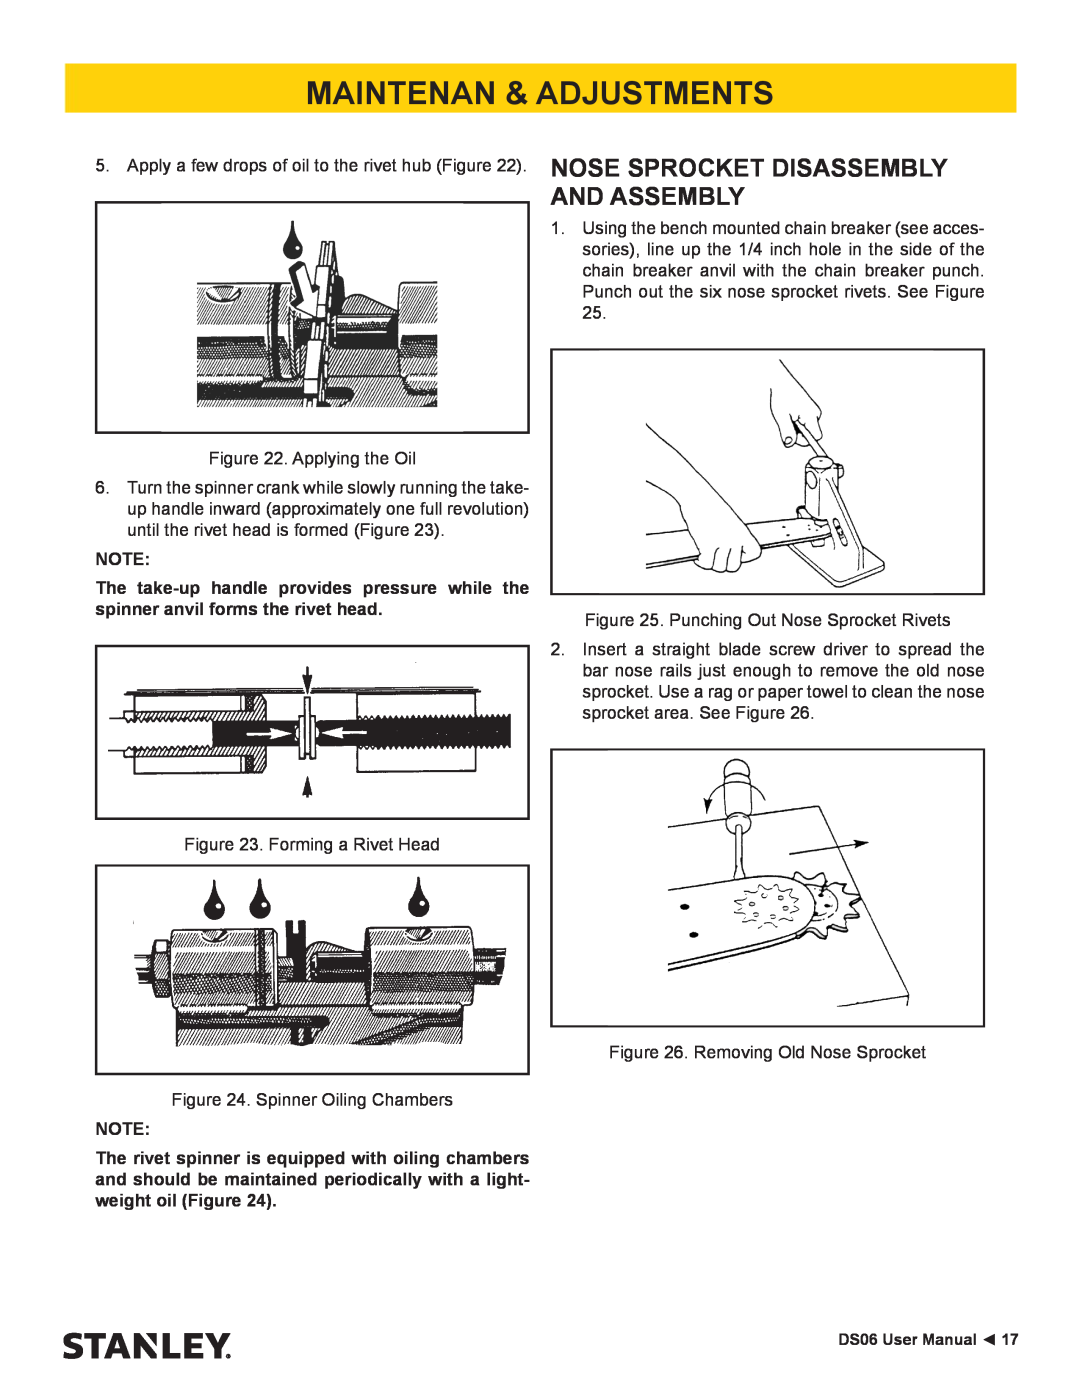 Stanley Black & Decker DS06 user manual Nose Sprocket Disassembly And Assembly, Maintenan & Adjustments 